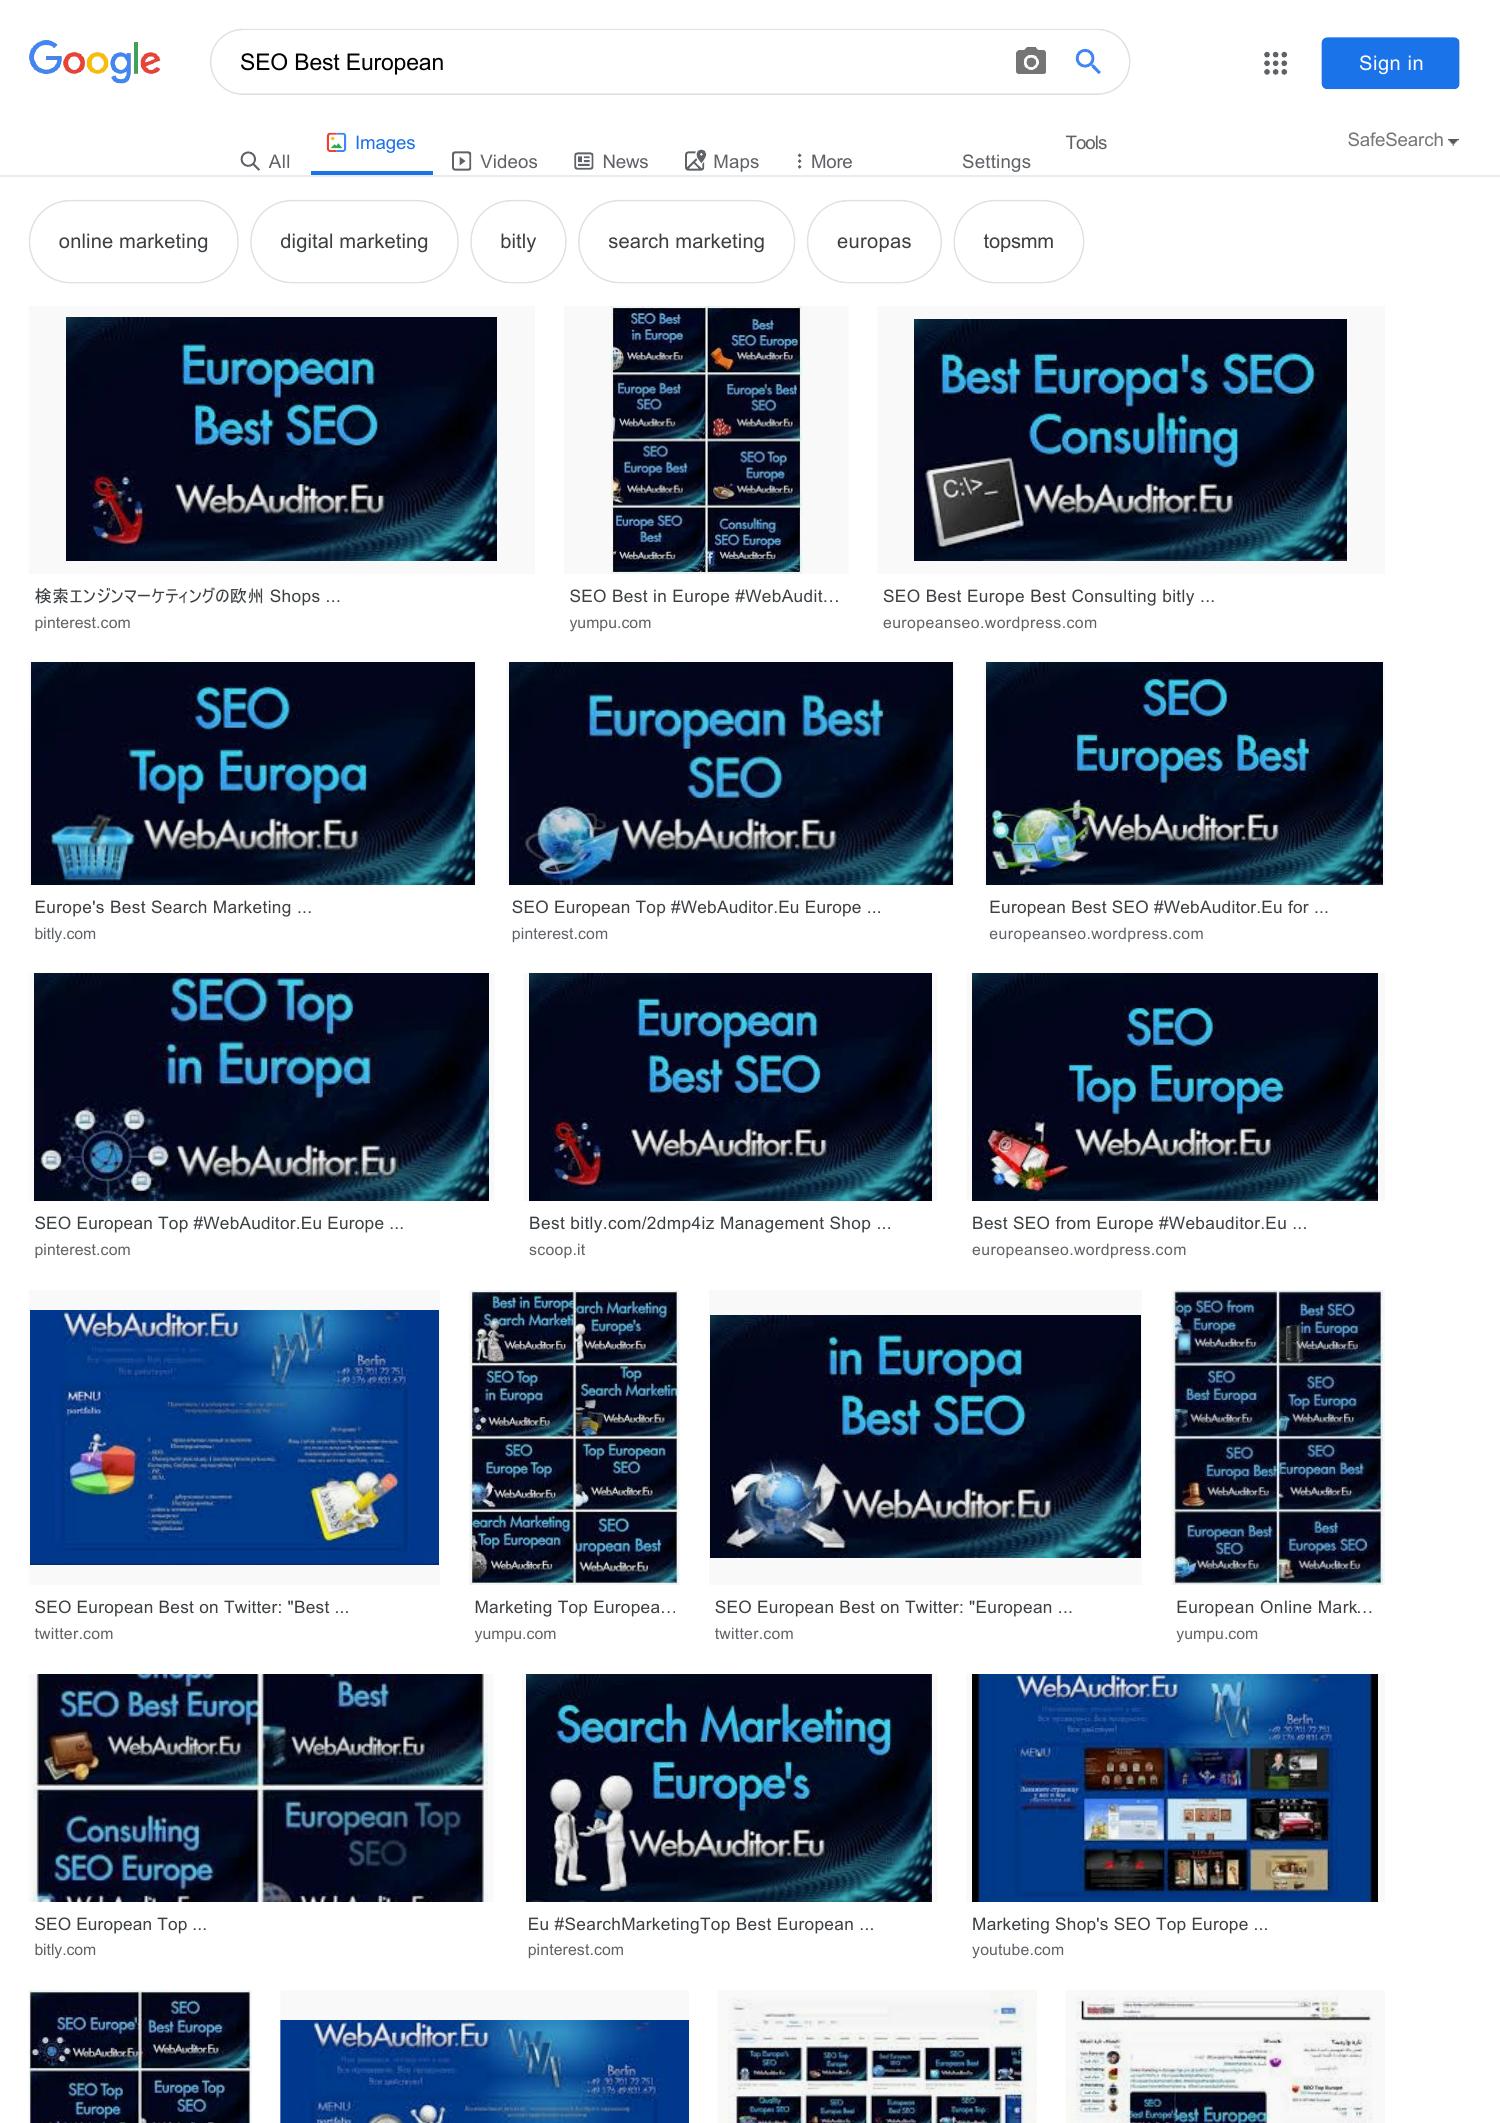 seo-best-european-google-search-top-online-marketing-agencies-in-europe-webauditoreu-compilation-for-best-european-seo-pdf